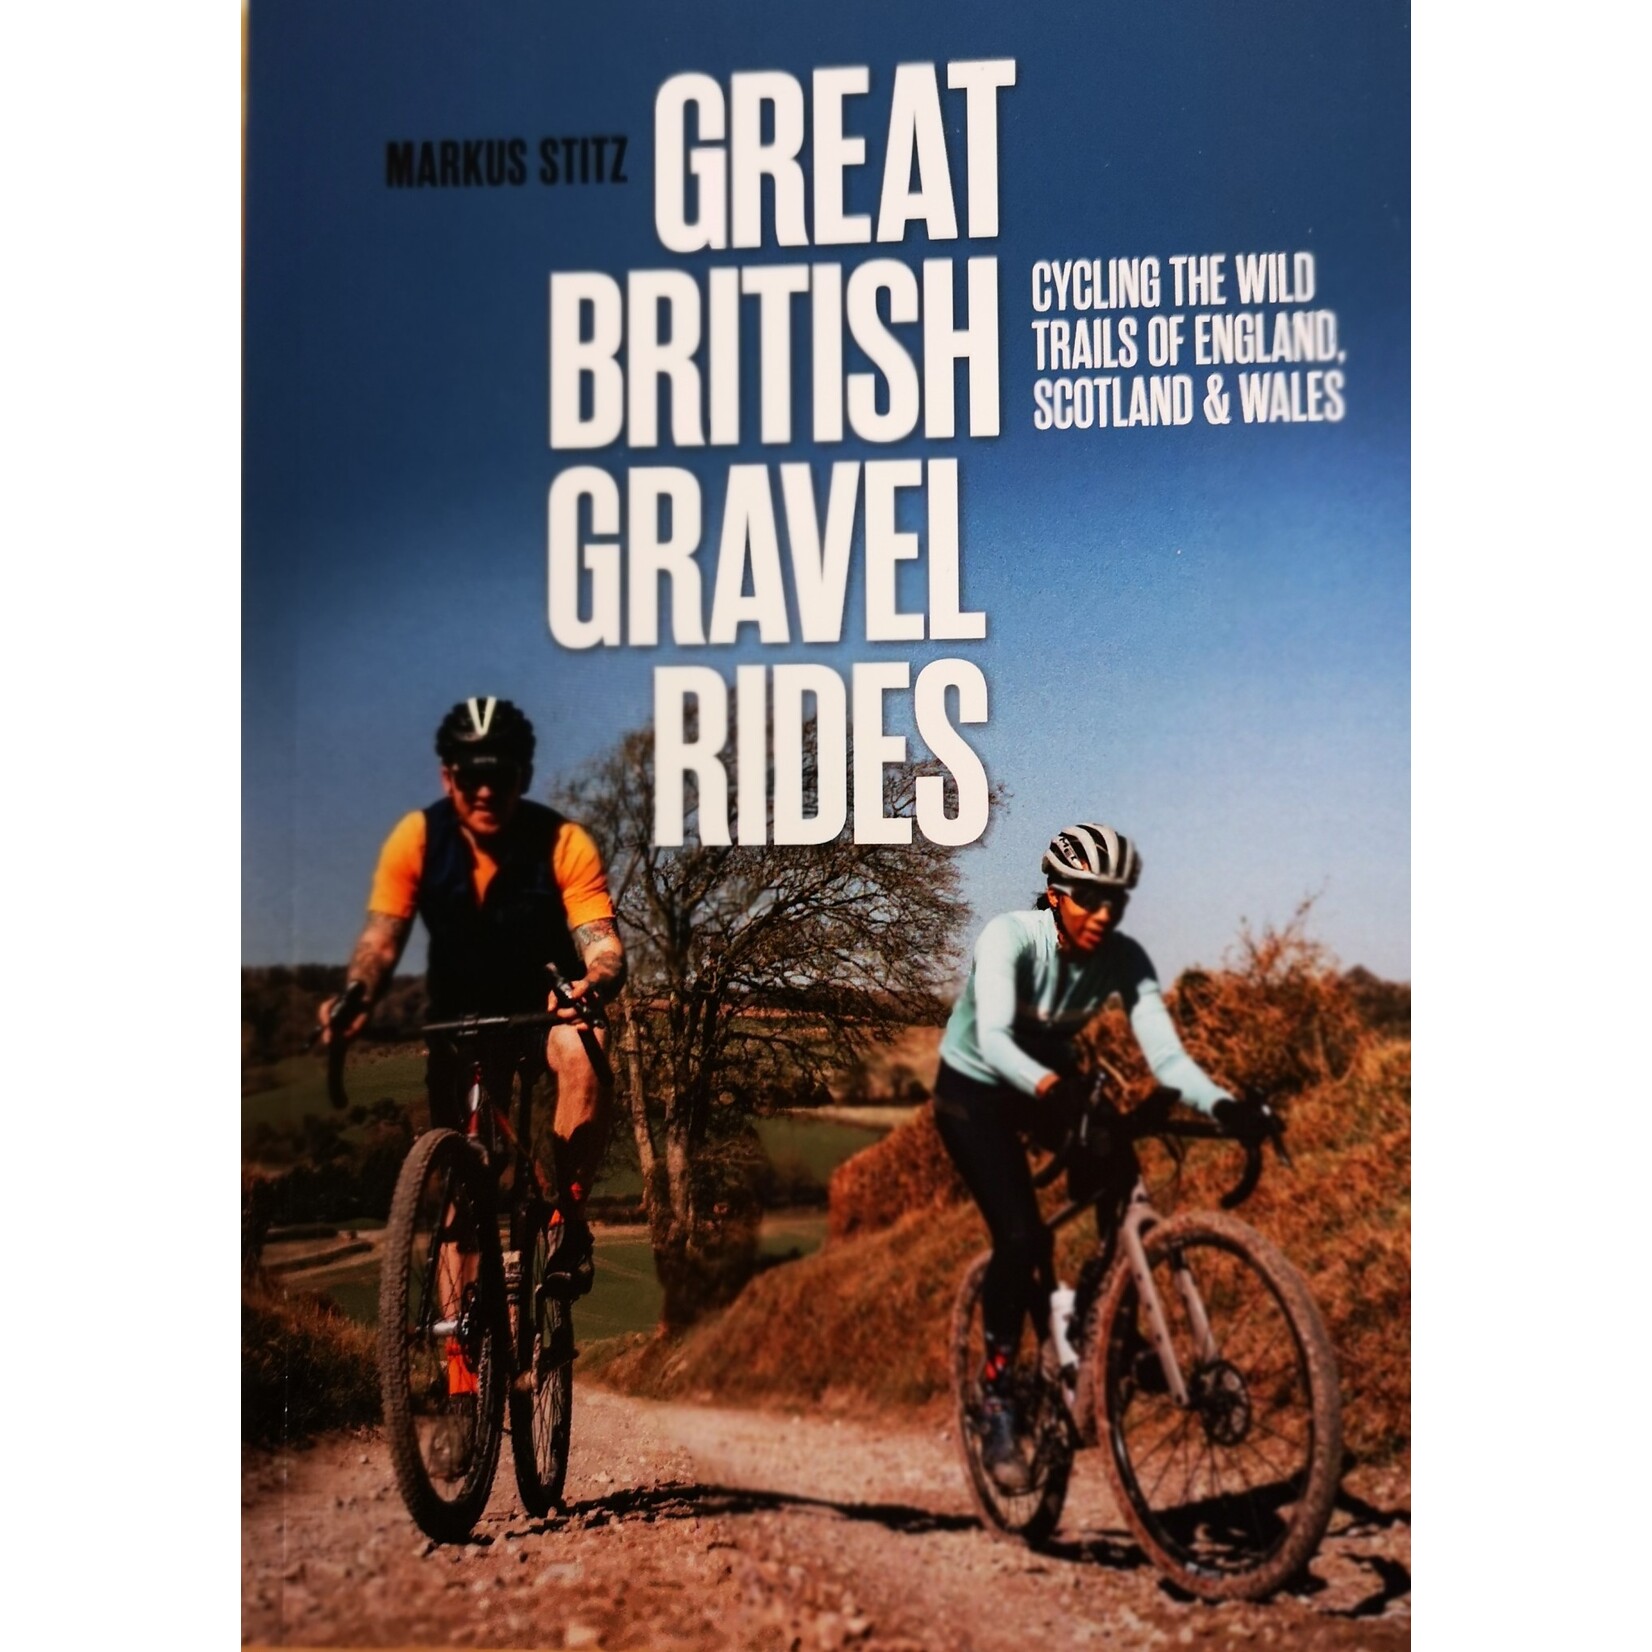 Great British Gravel Rides - Markus Stitz